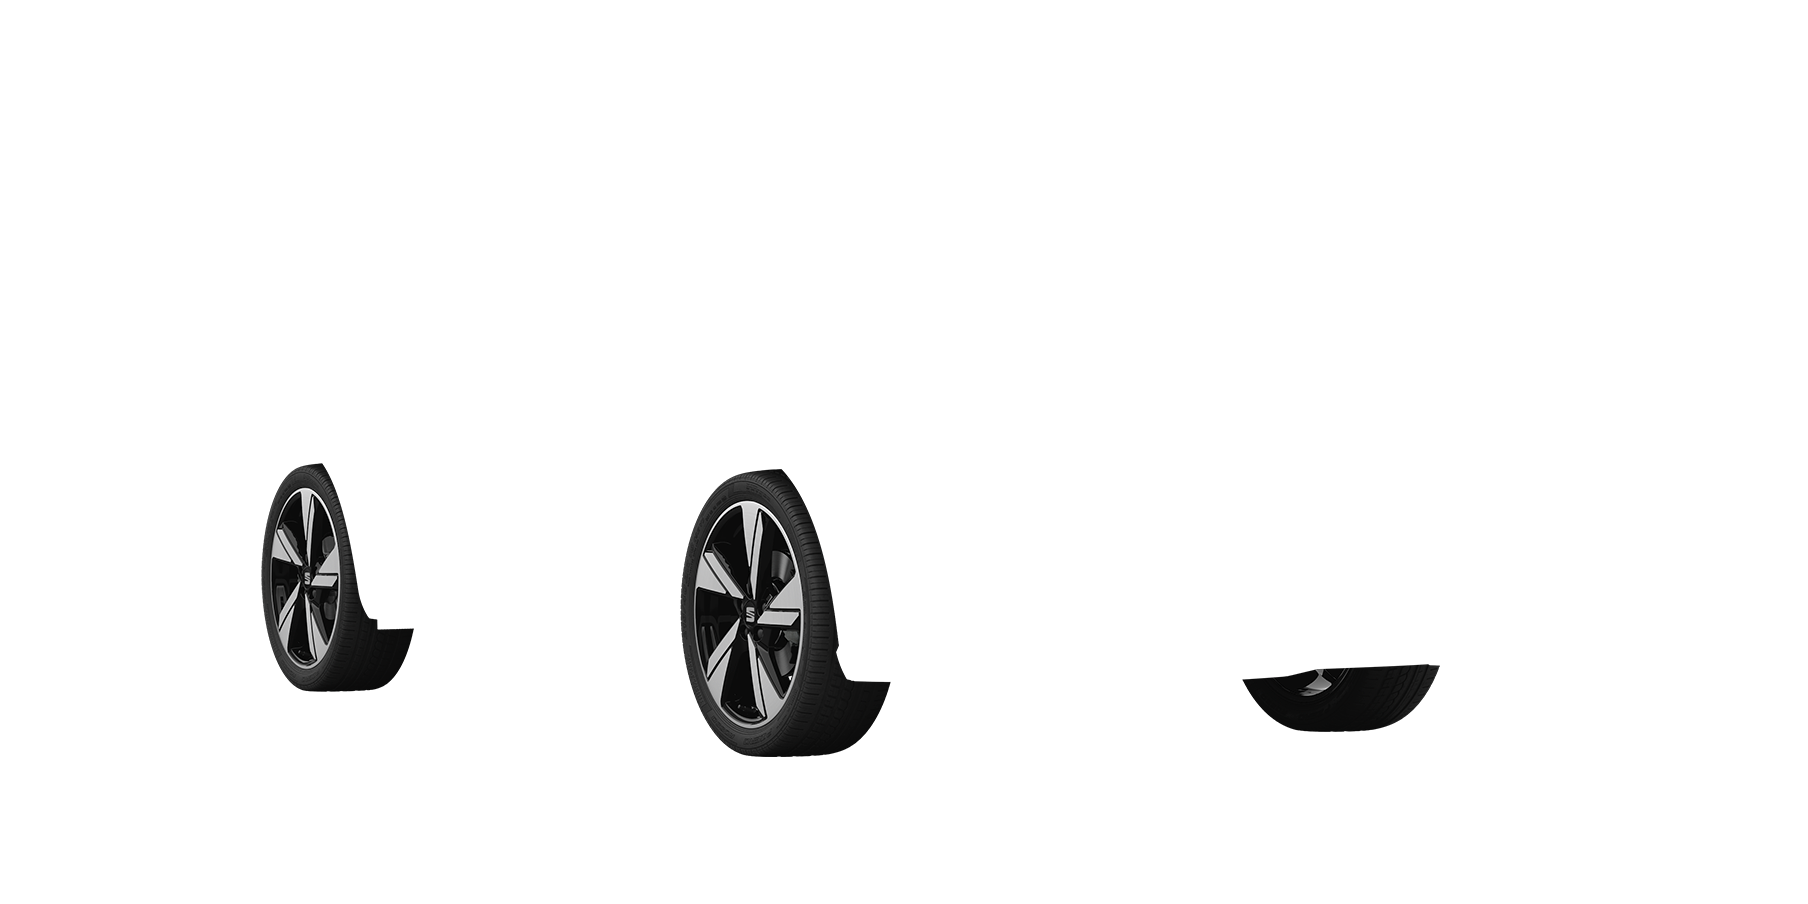 seat ibiza xc performance 18 inch black machined alloy wheels